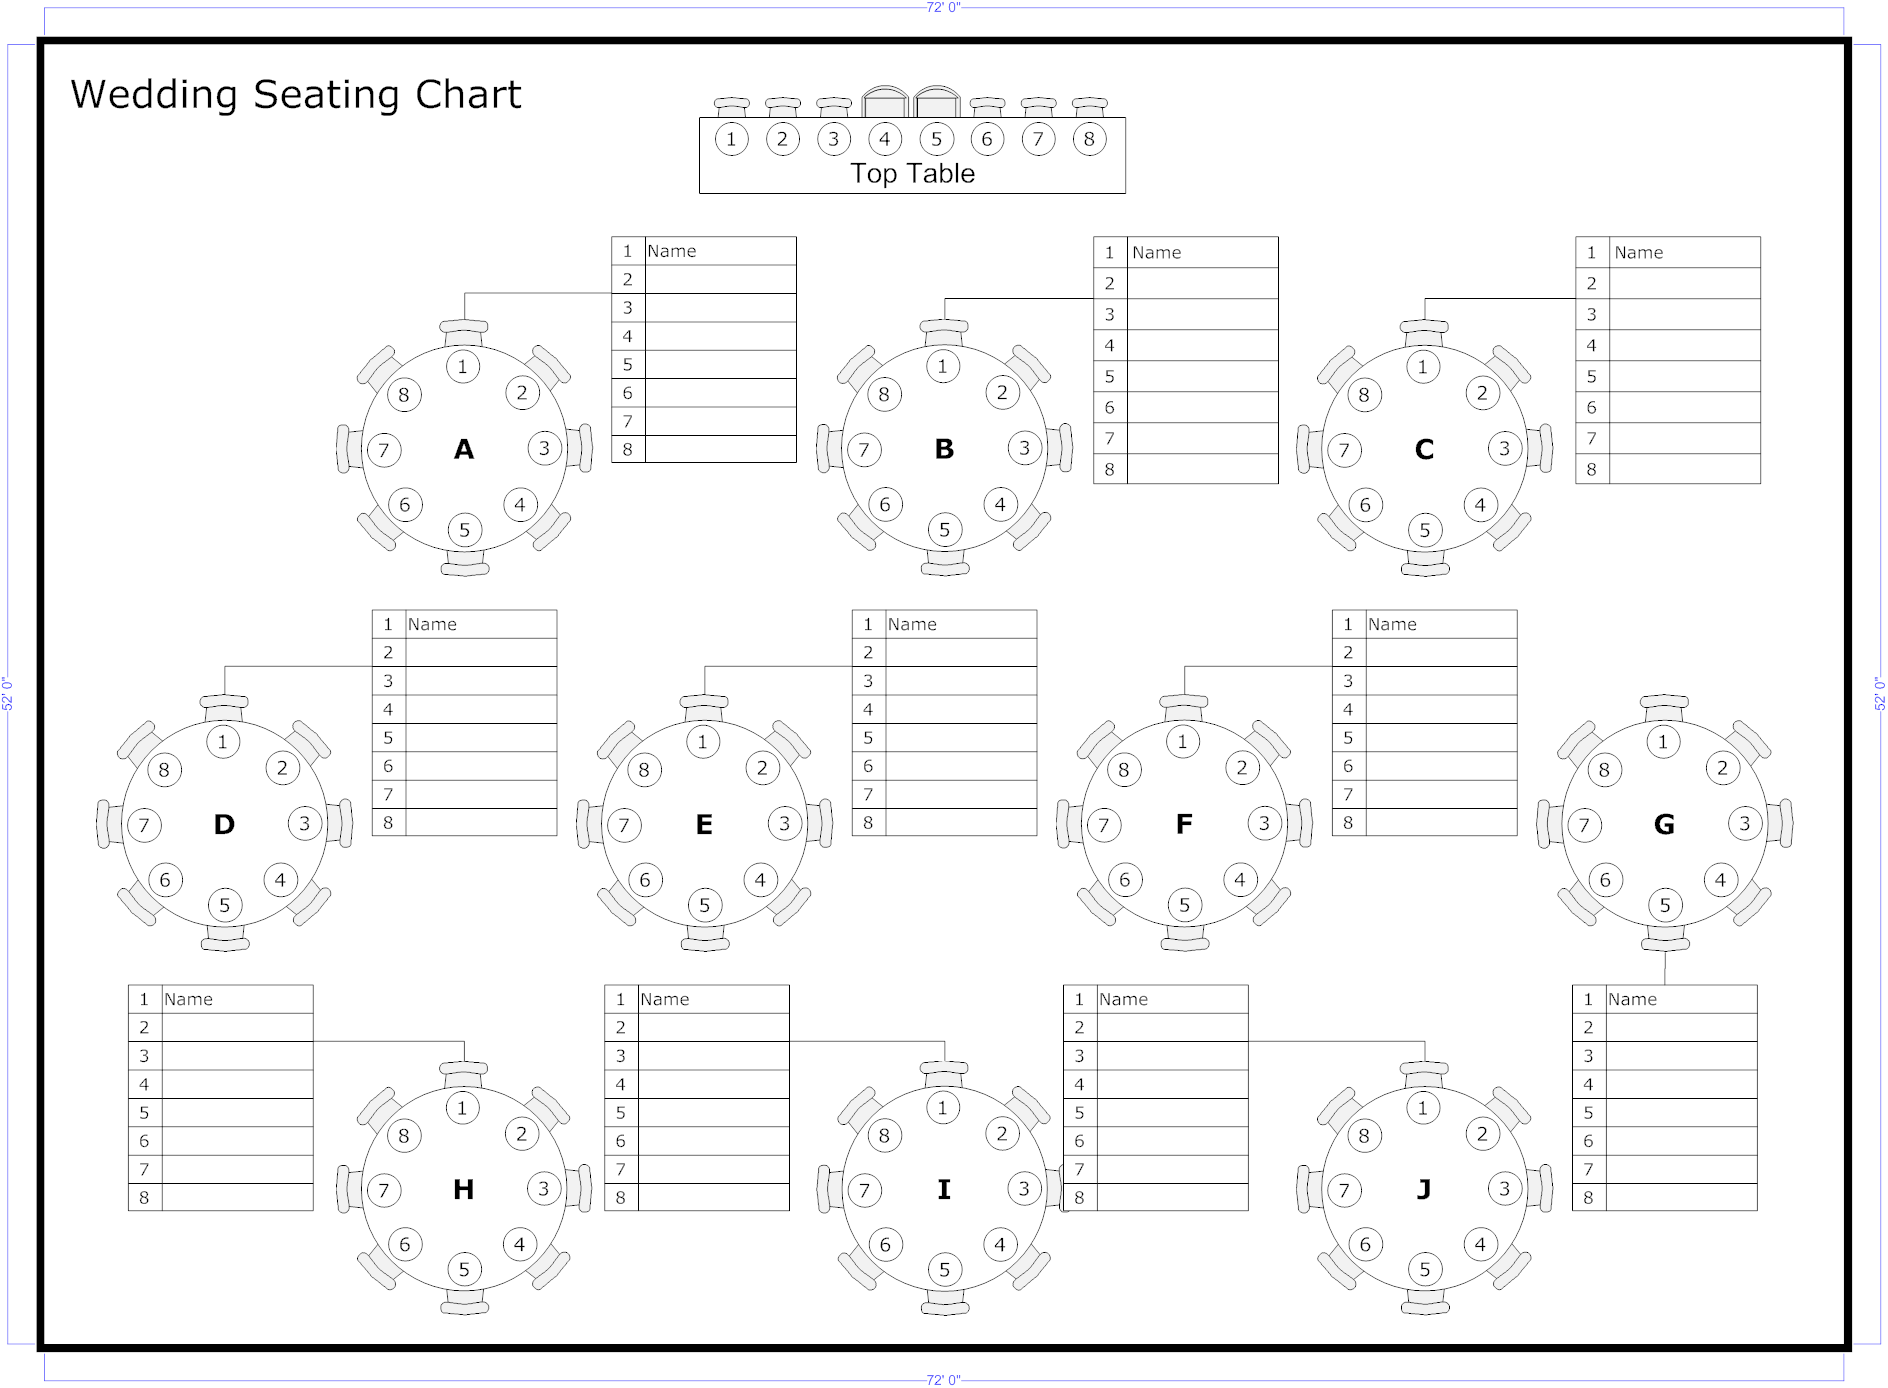 Sample Seating Chart